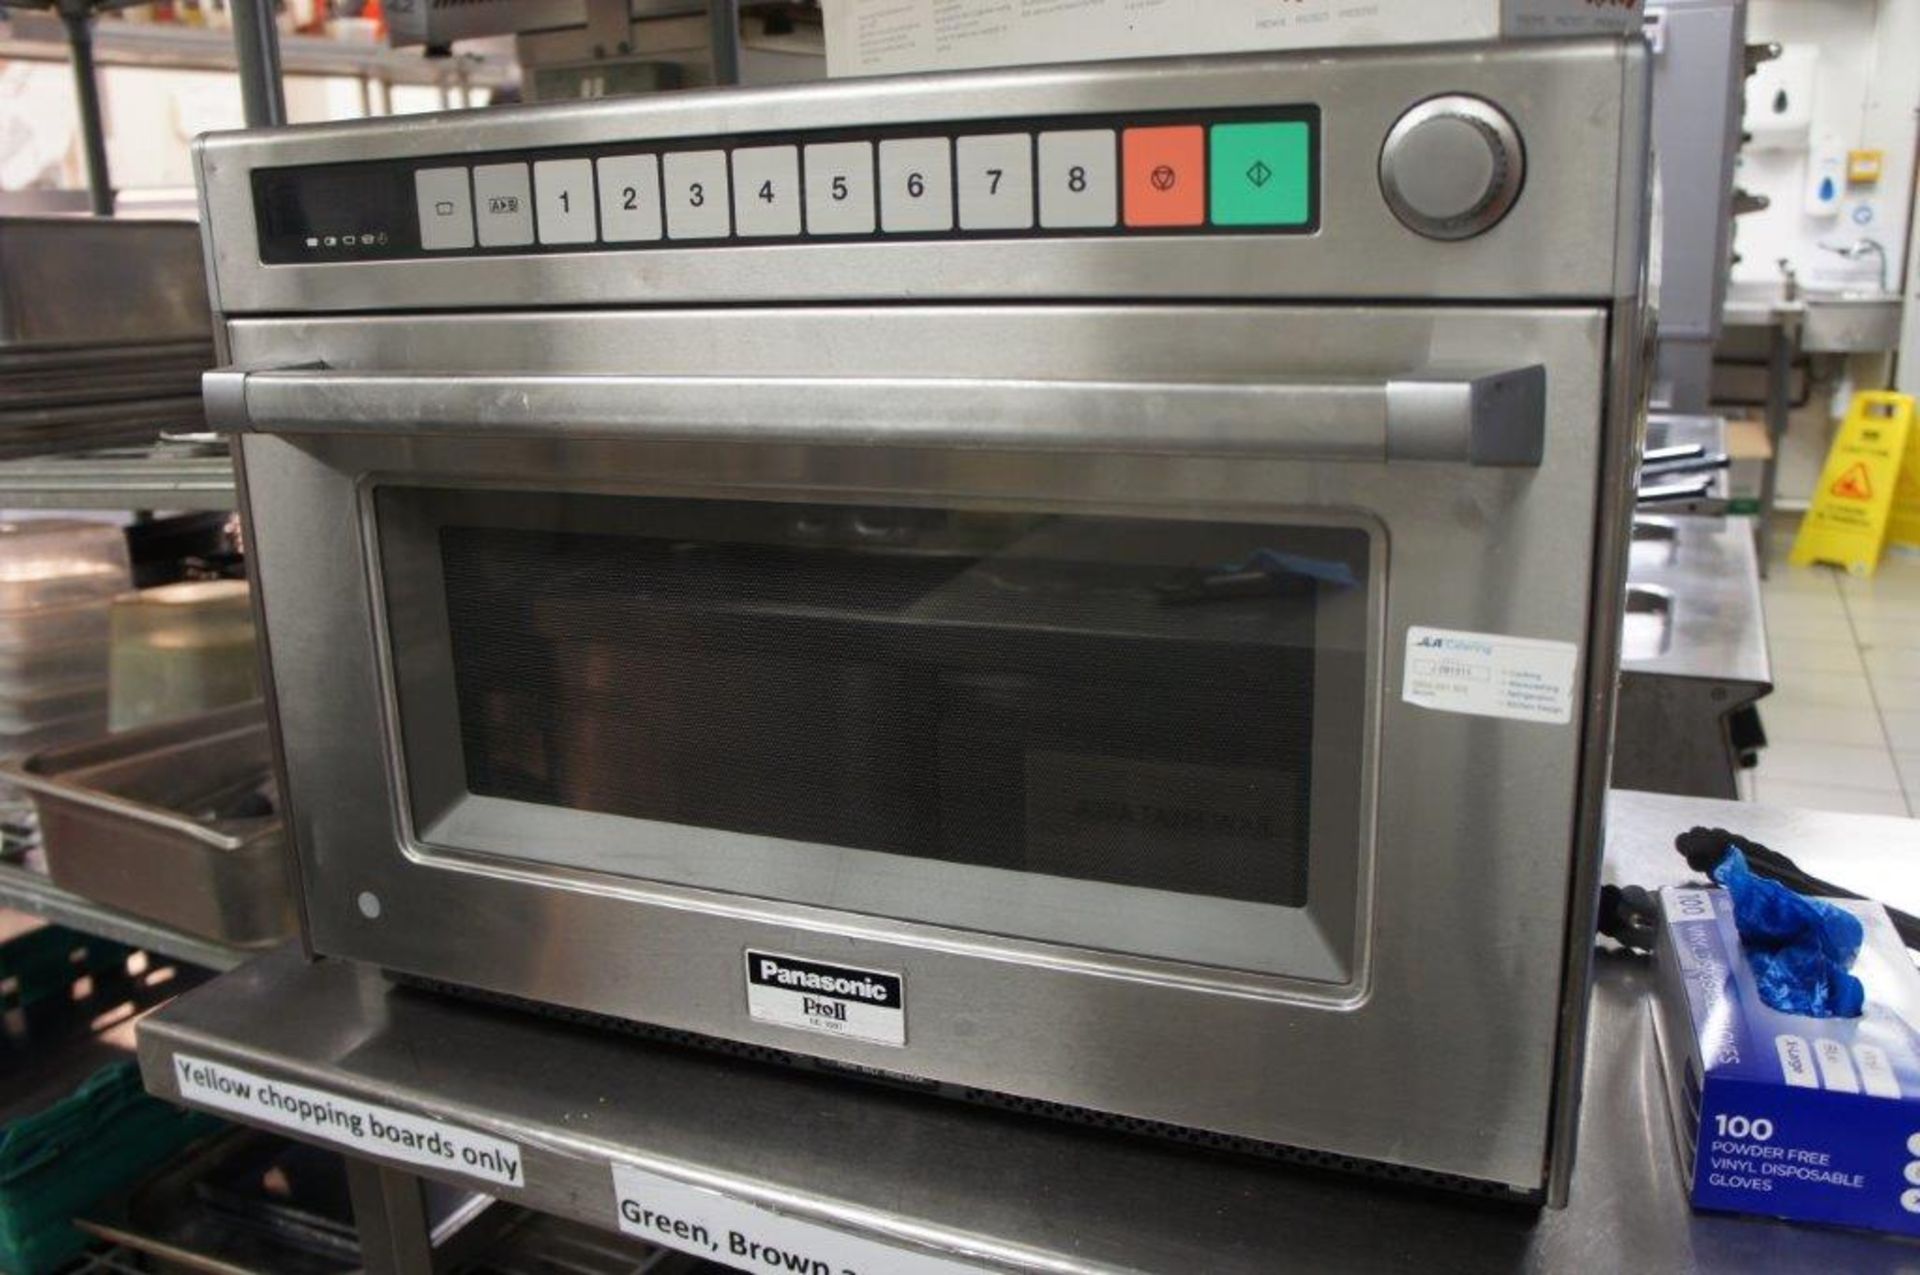 Panasonic Proll NE-1880 microwave oven